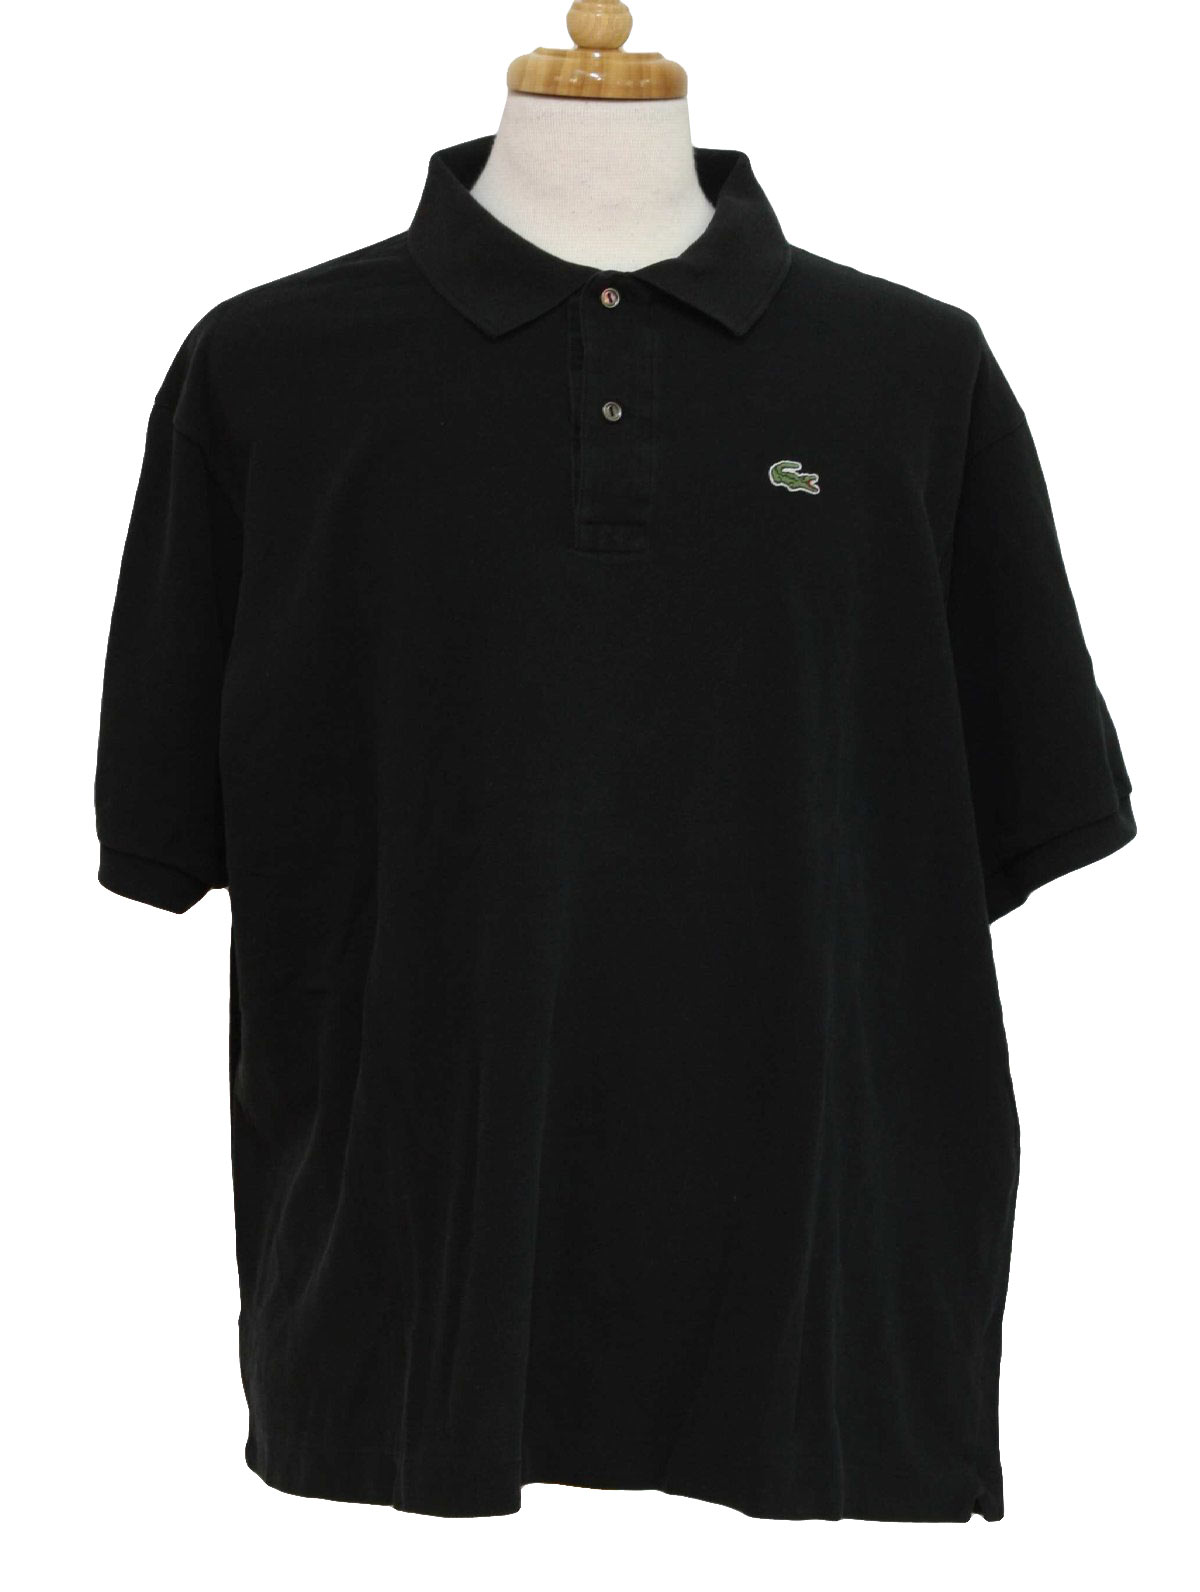 Eighties Lacoste Shirt: 80s -Lacoste- Mens black woven cotton short ...